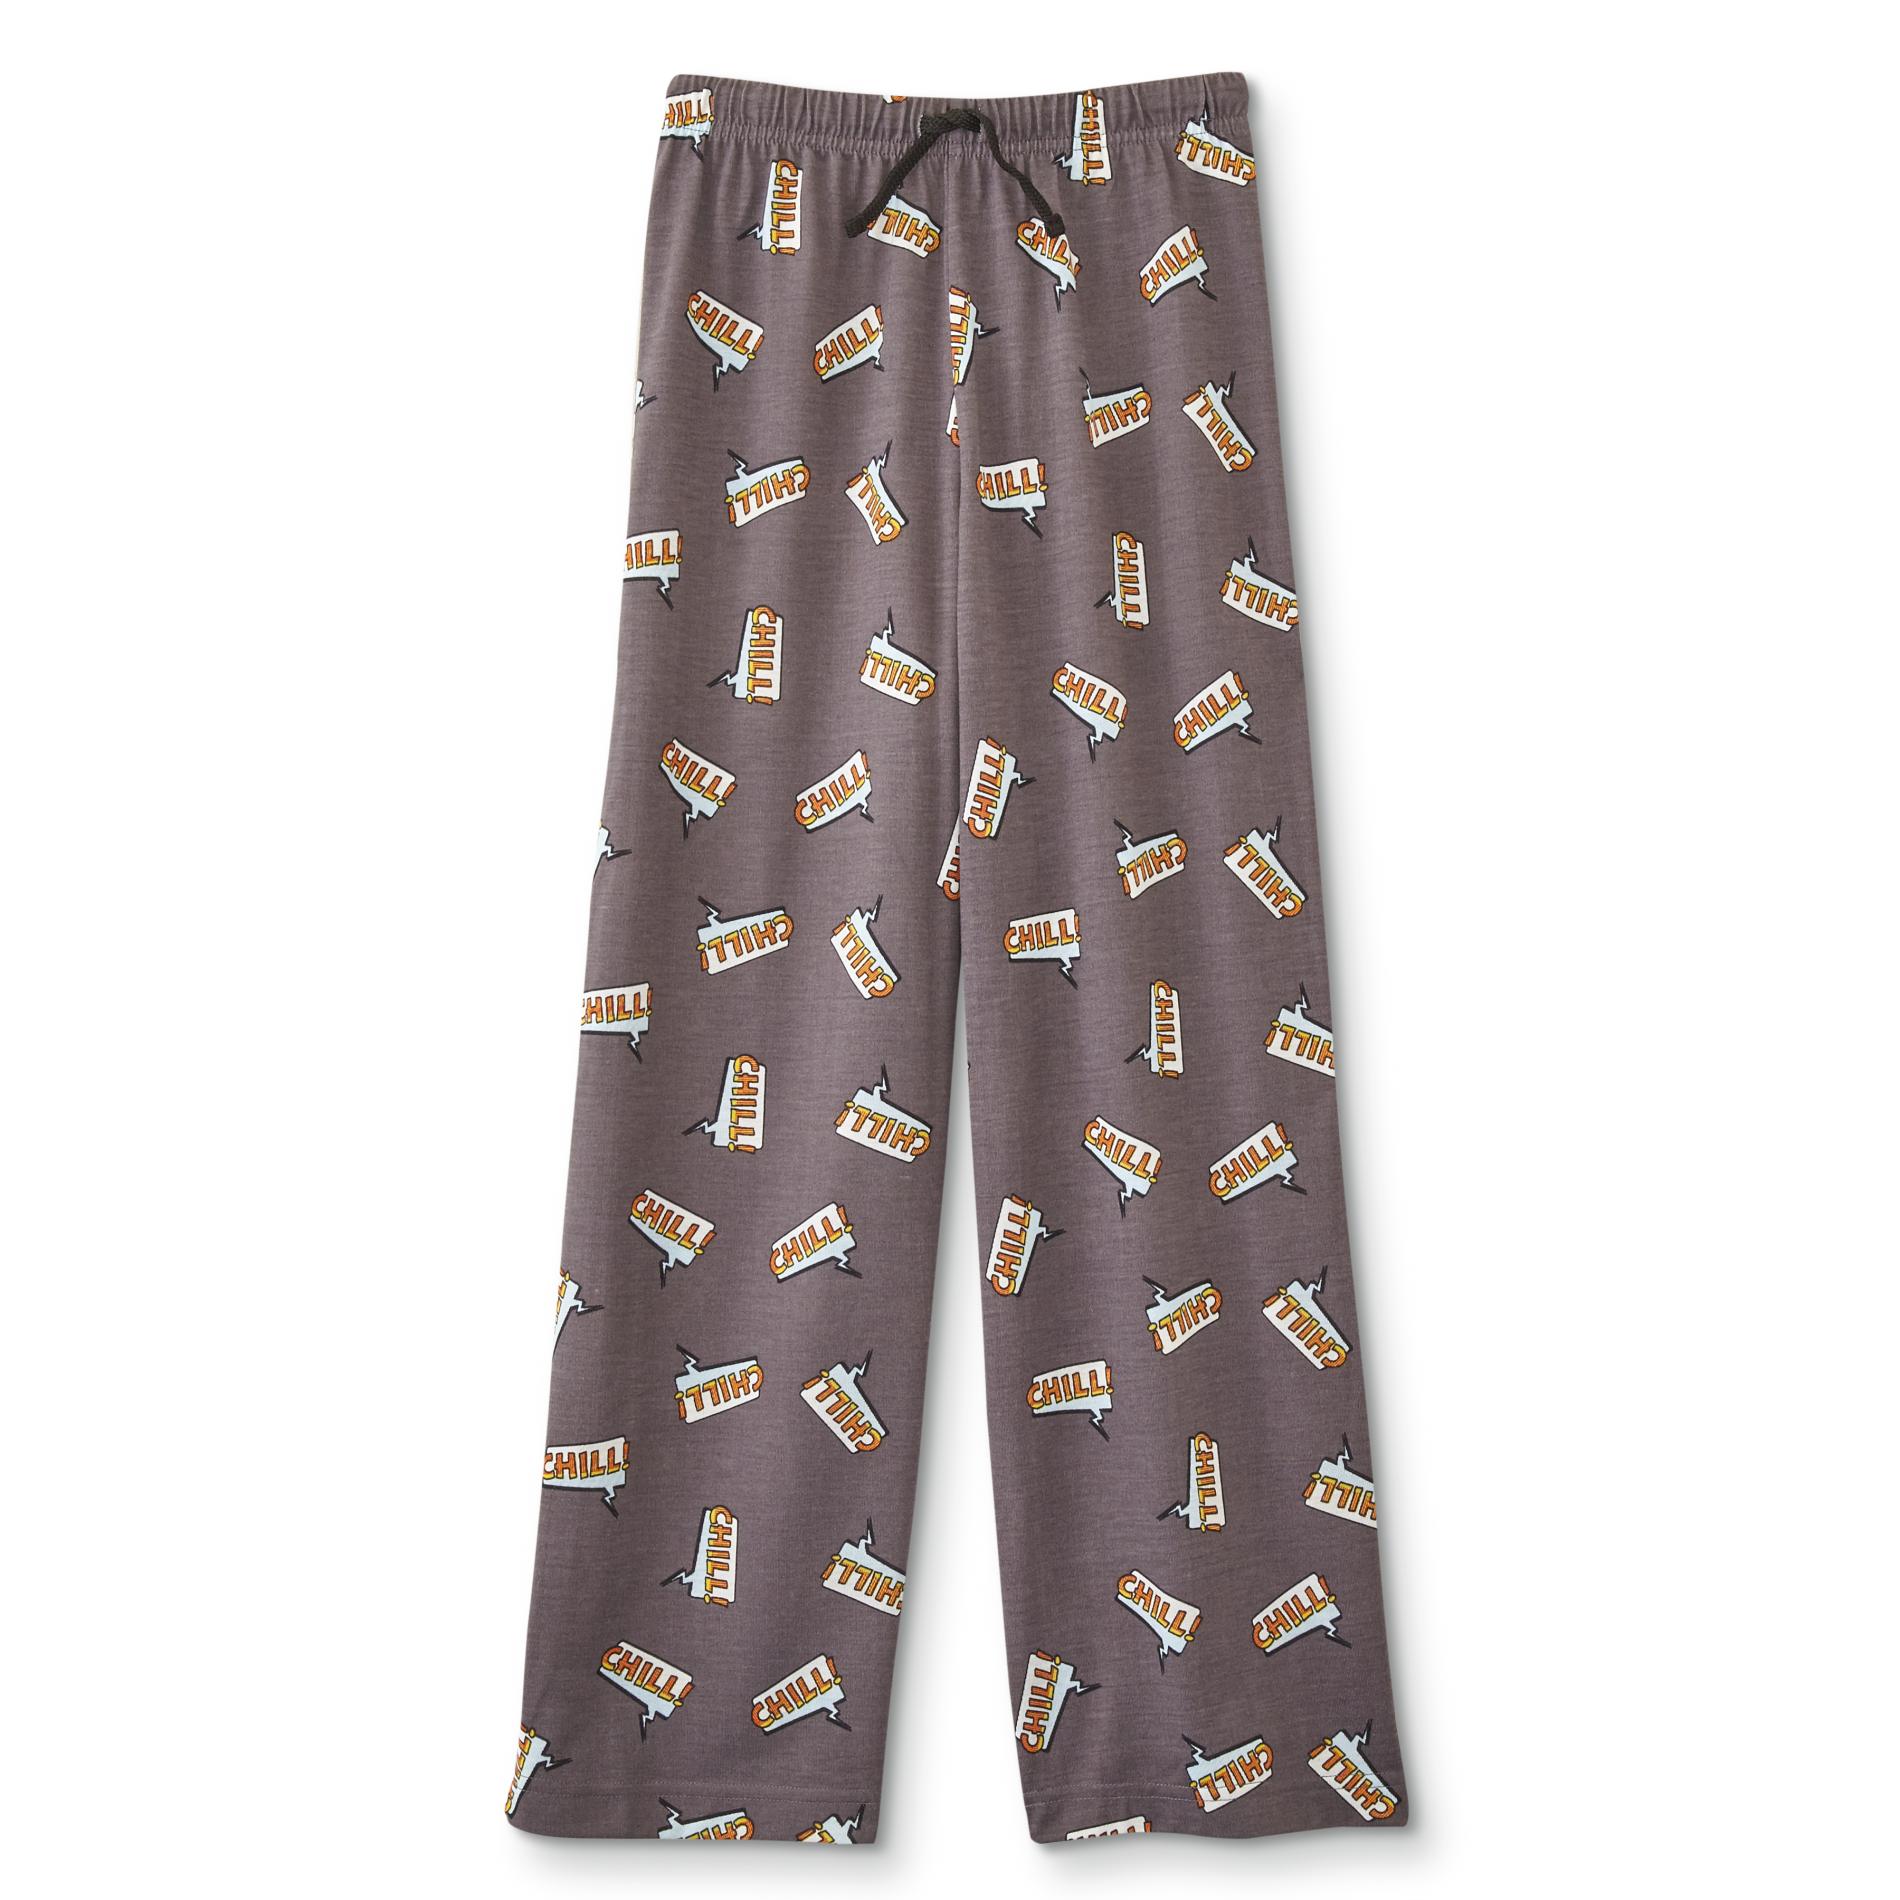 Basic Editions Boys' Pajama Pants - Chill